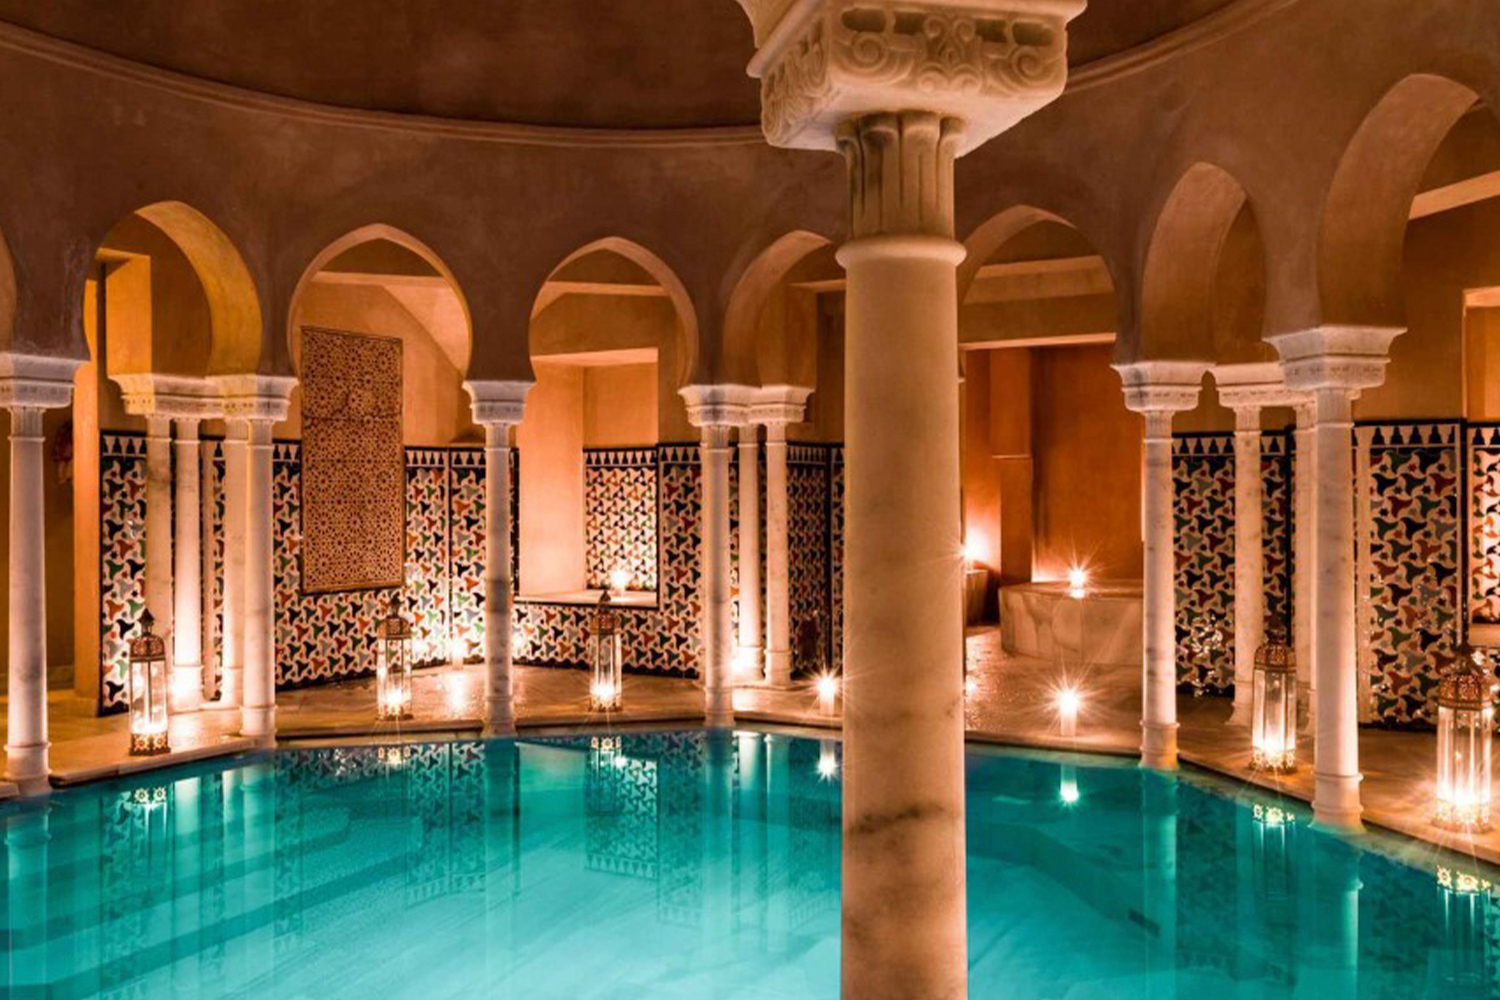 Hotel swimming pool in Madrid